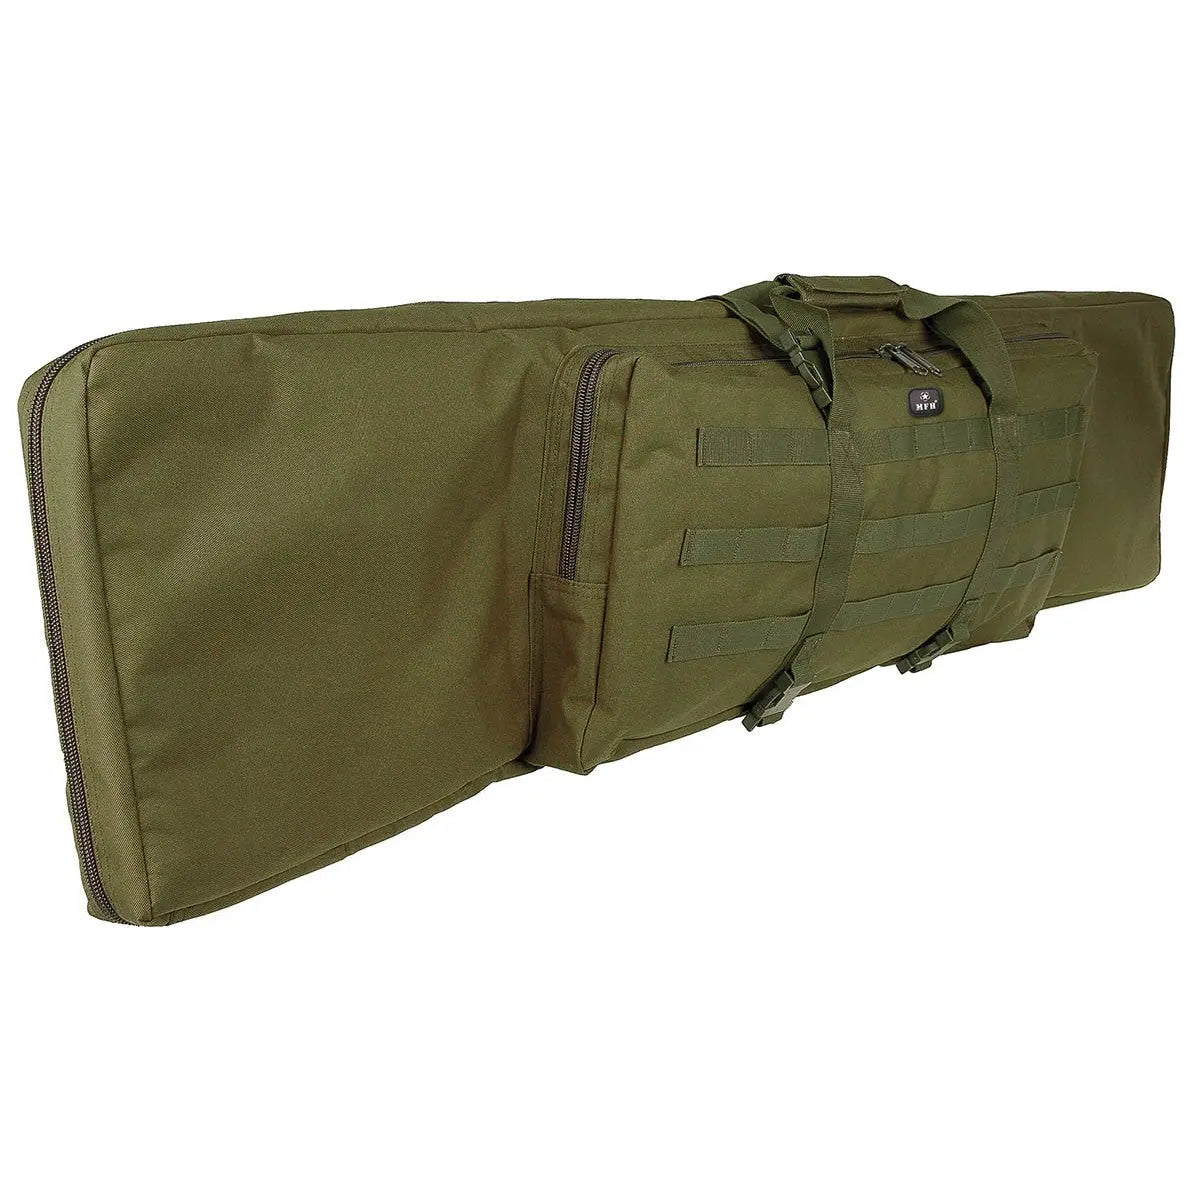 Rifle Bag, "Large", OD green, for 2 rifles NSO Gear Gun Cases & Range Bags